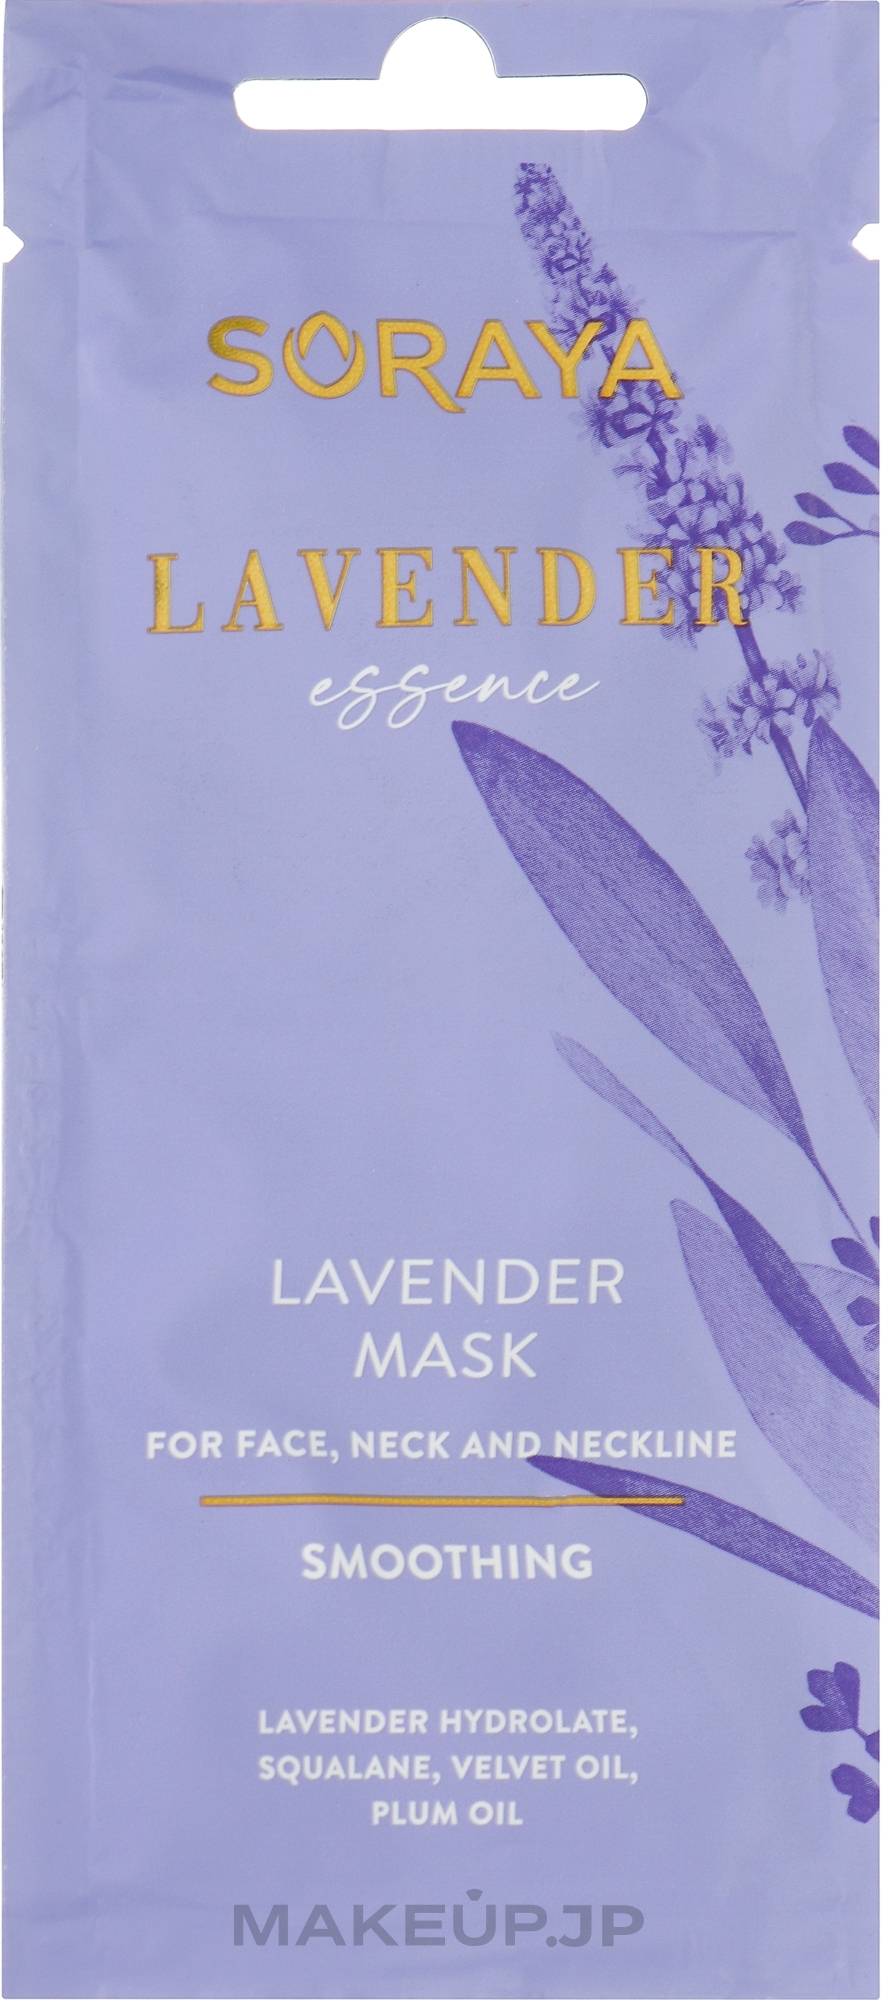 Smoothing Lavender Face, Neck & Decollete Mask - Soraya Lavender Essence — photo 8 ml